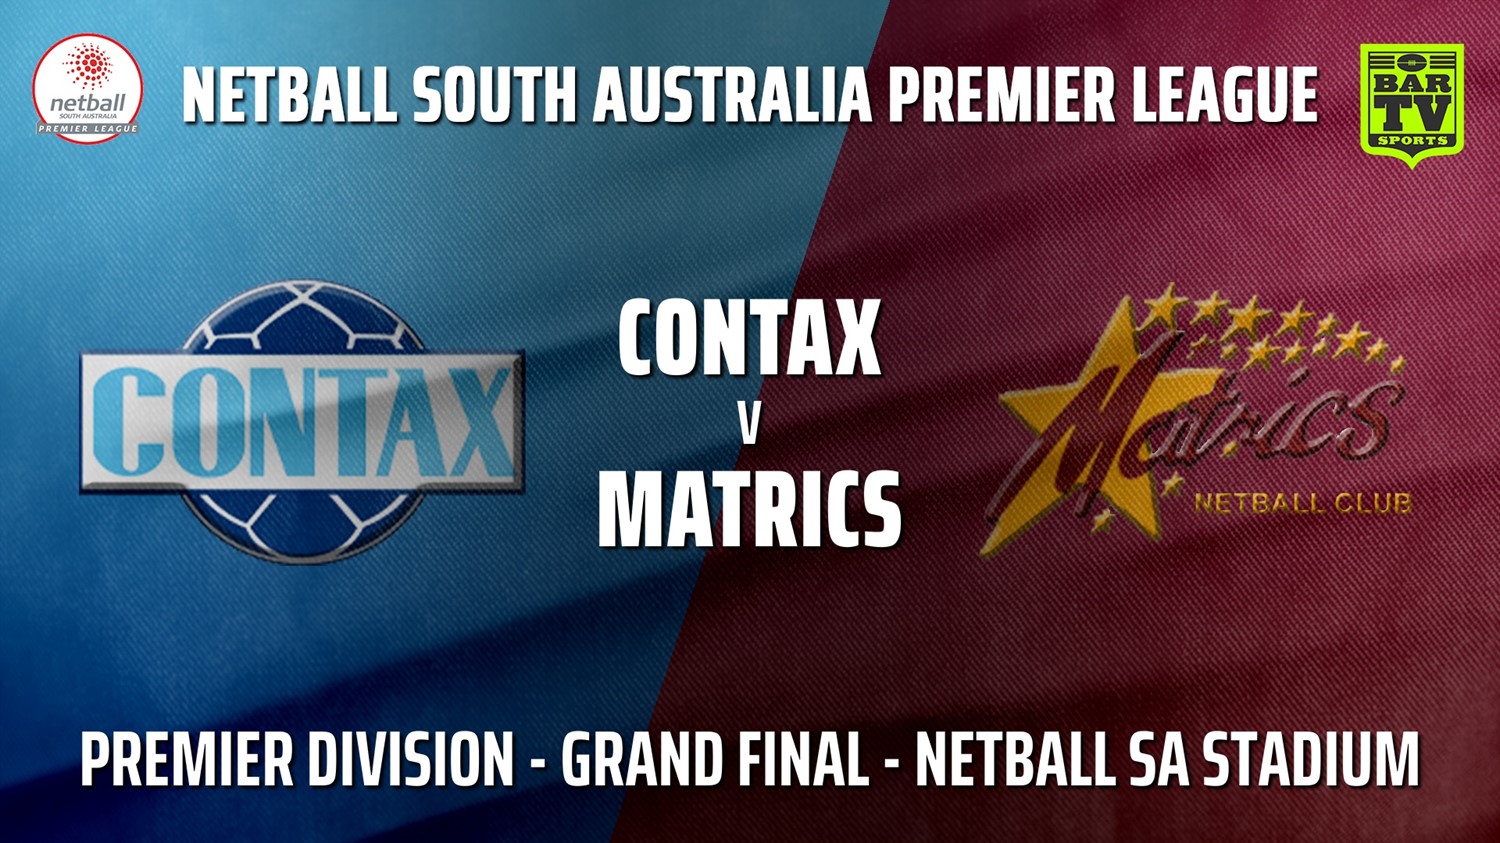 210903-SA Premier League Grand Final - Premier Division - Contax v Matrics Slate Image